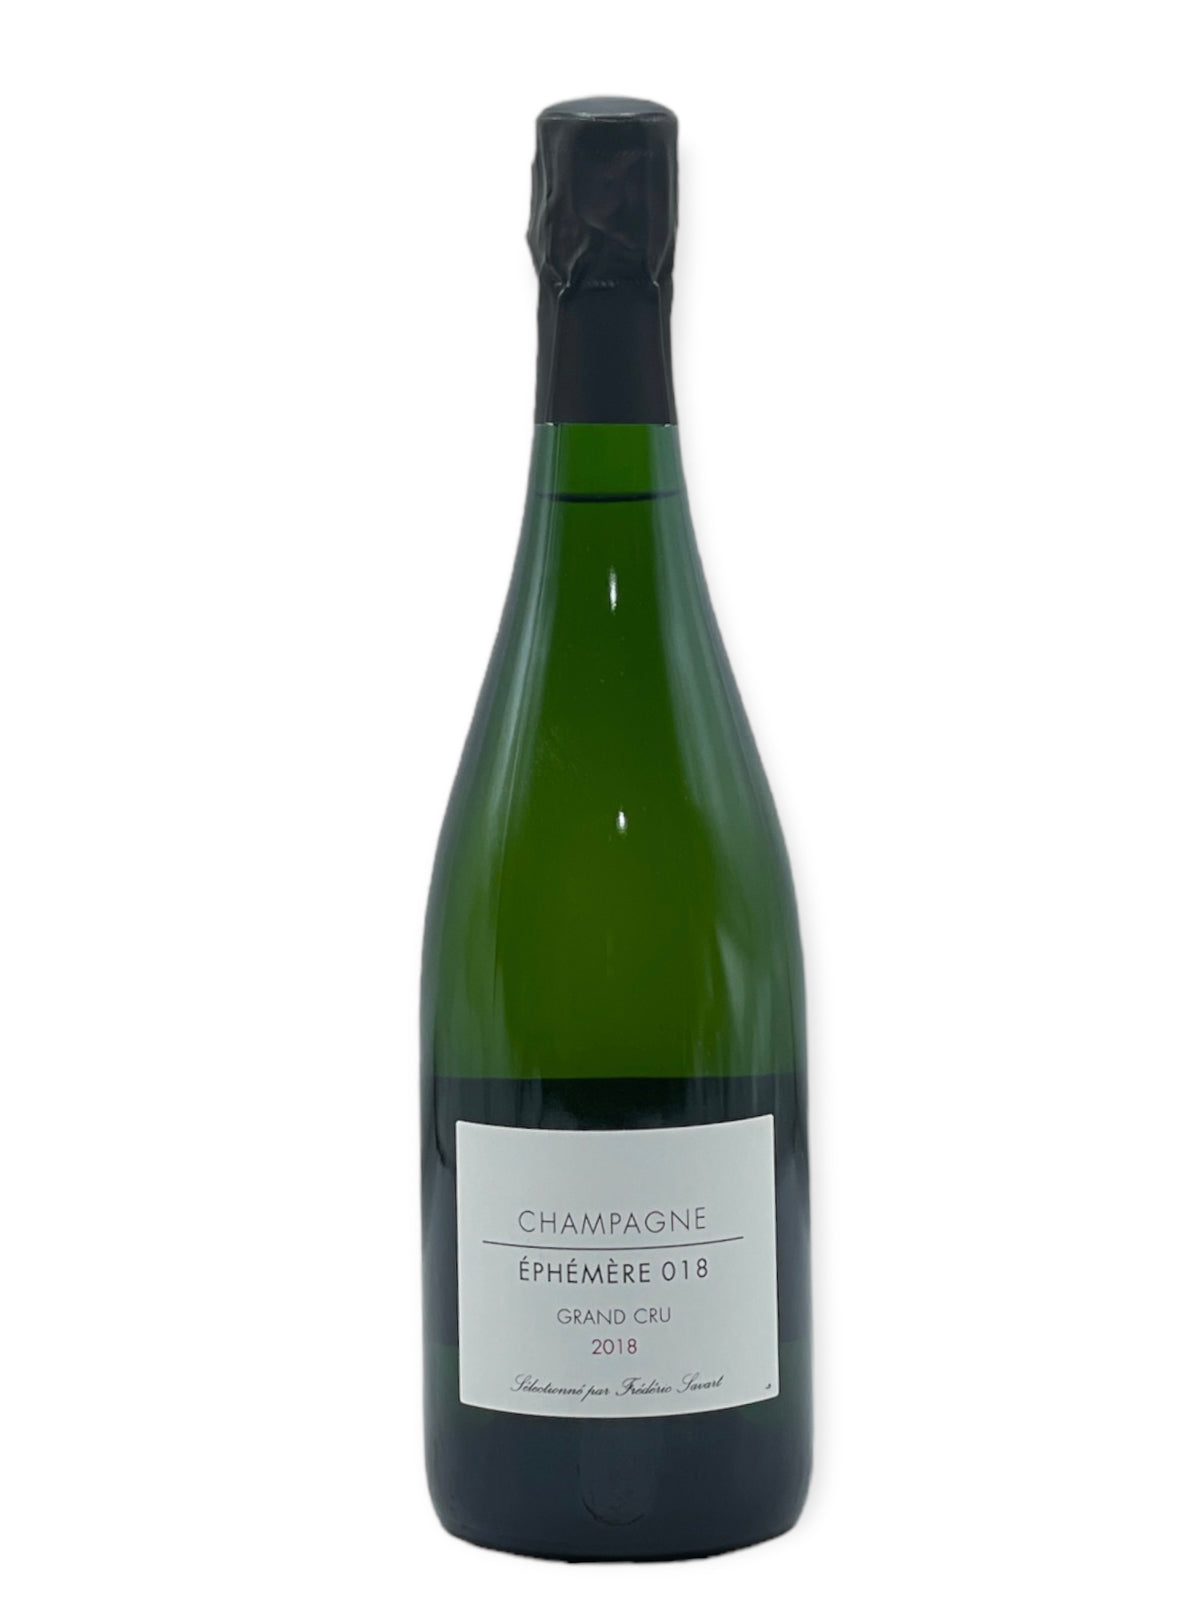 Champagne &#39;Ephemere 018&#39; Grand Cru F. Savart 2018